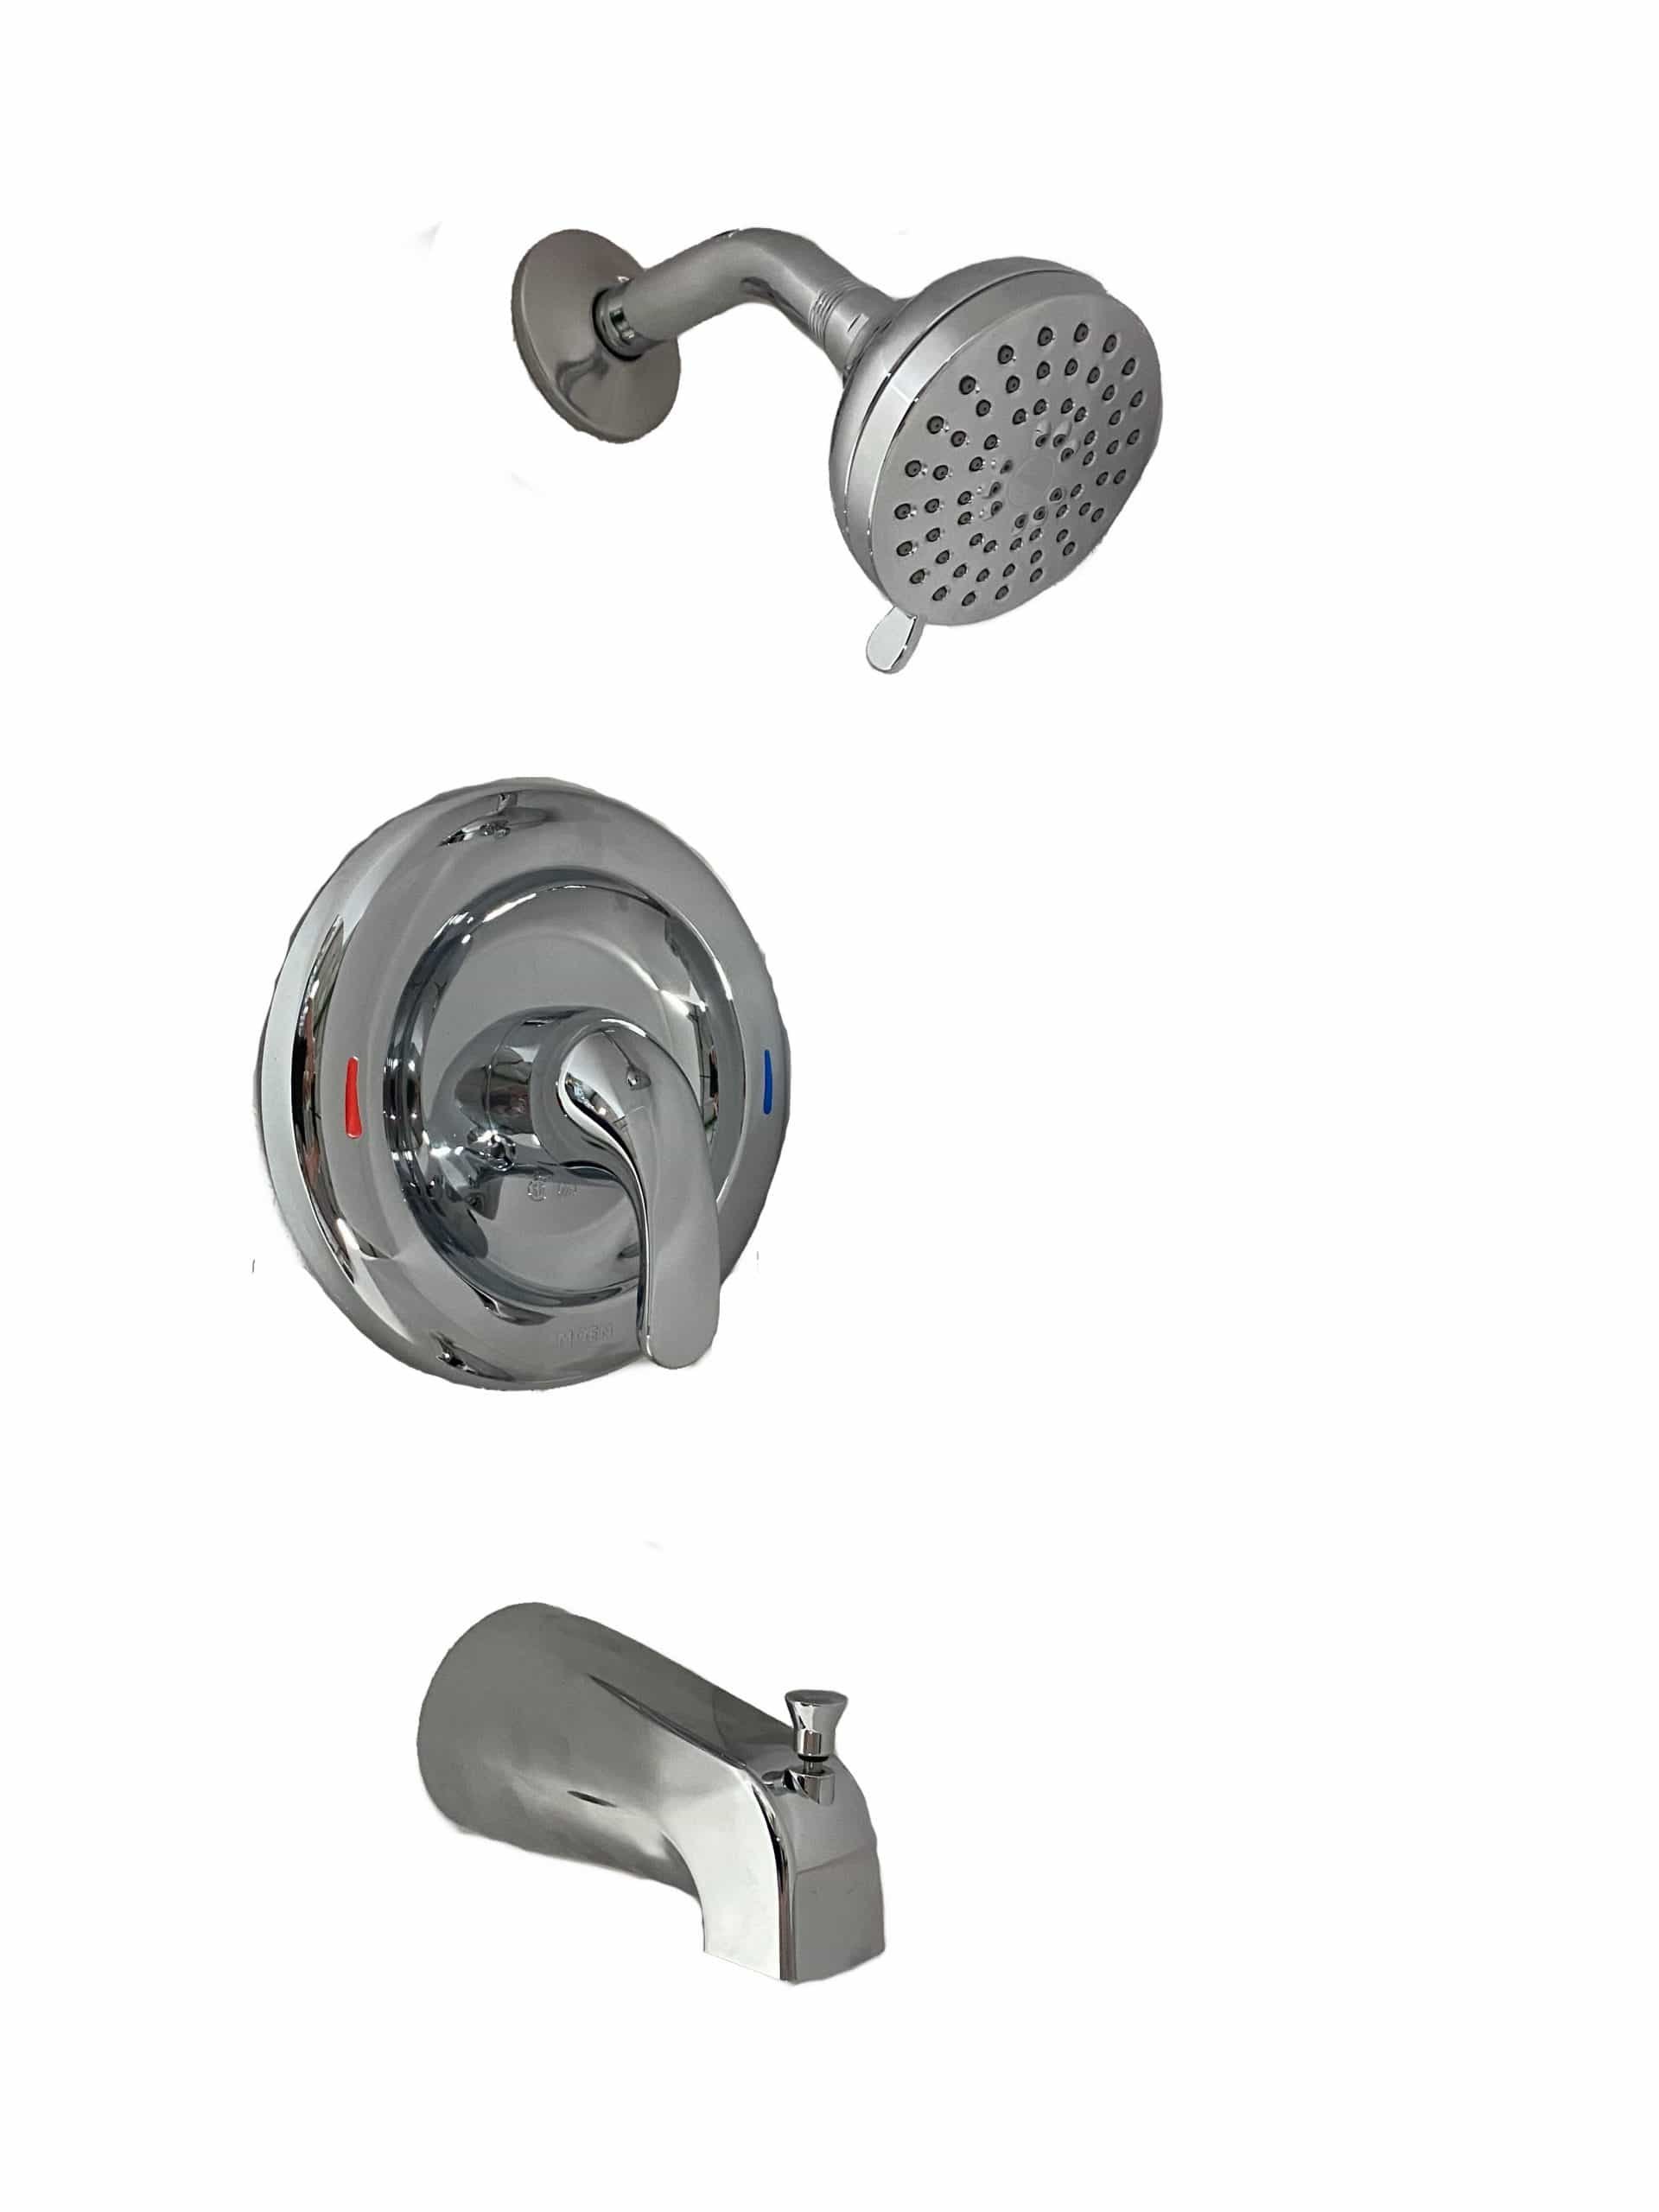 MOEN Adler Single-Handle 4-Spray Tub and Shower Faucet